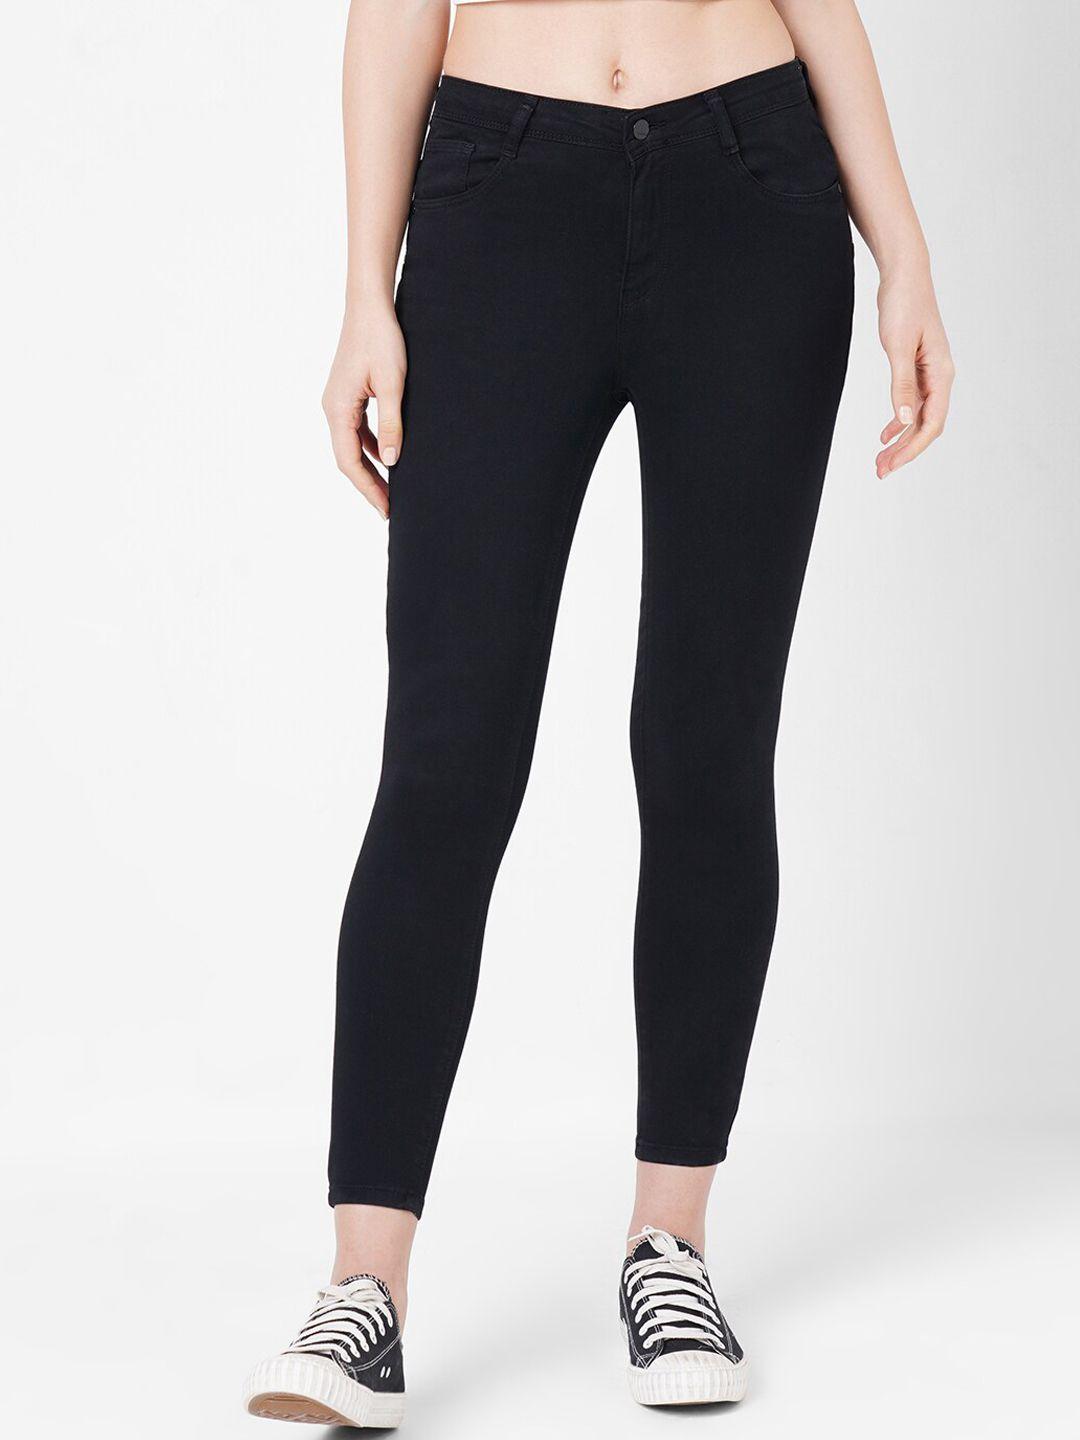 kraus-jeans-women-super-skinny-fit-mid-rise-jeans